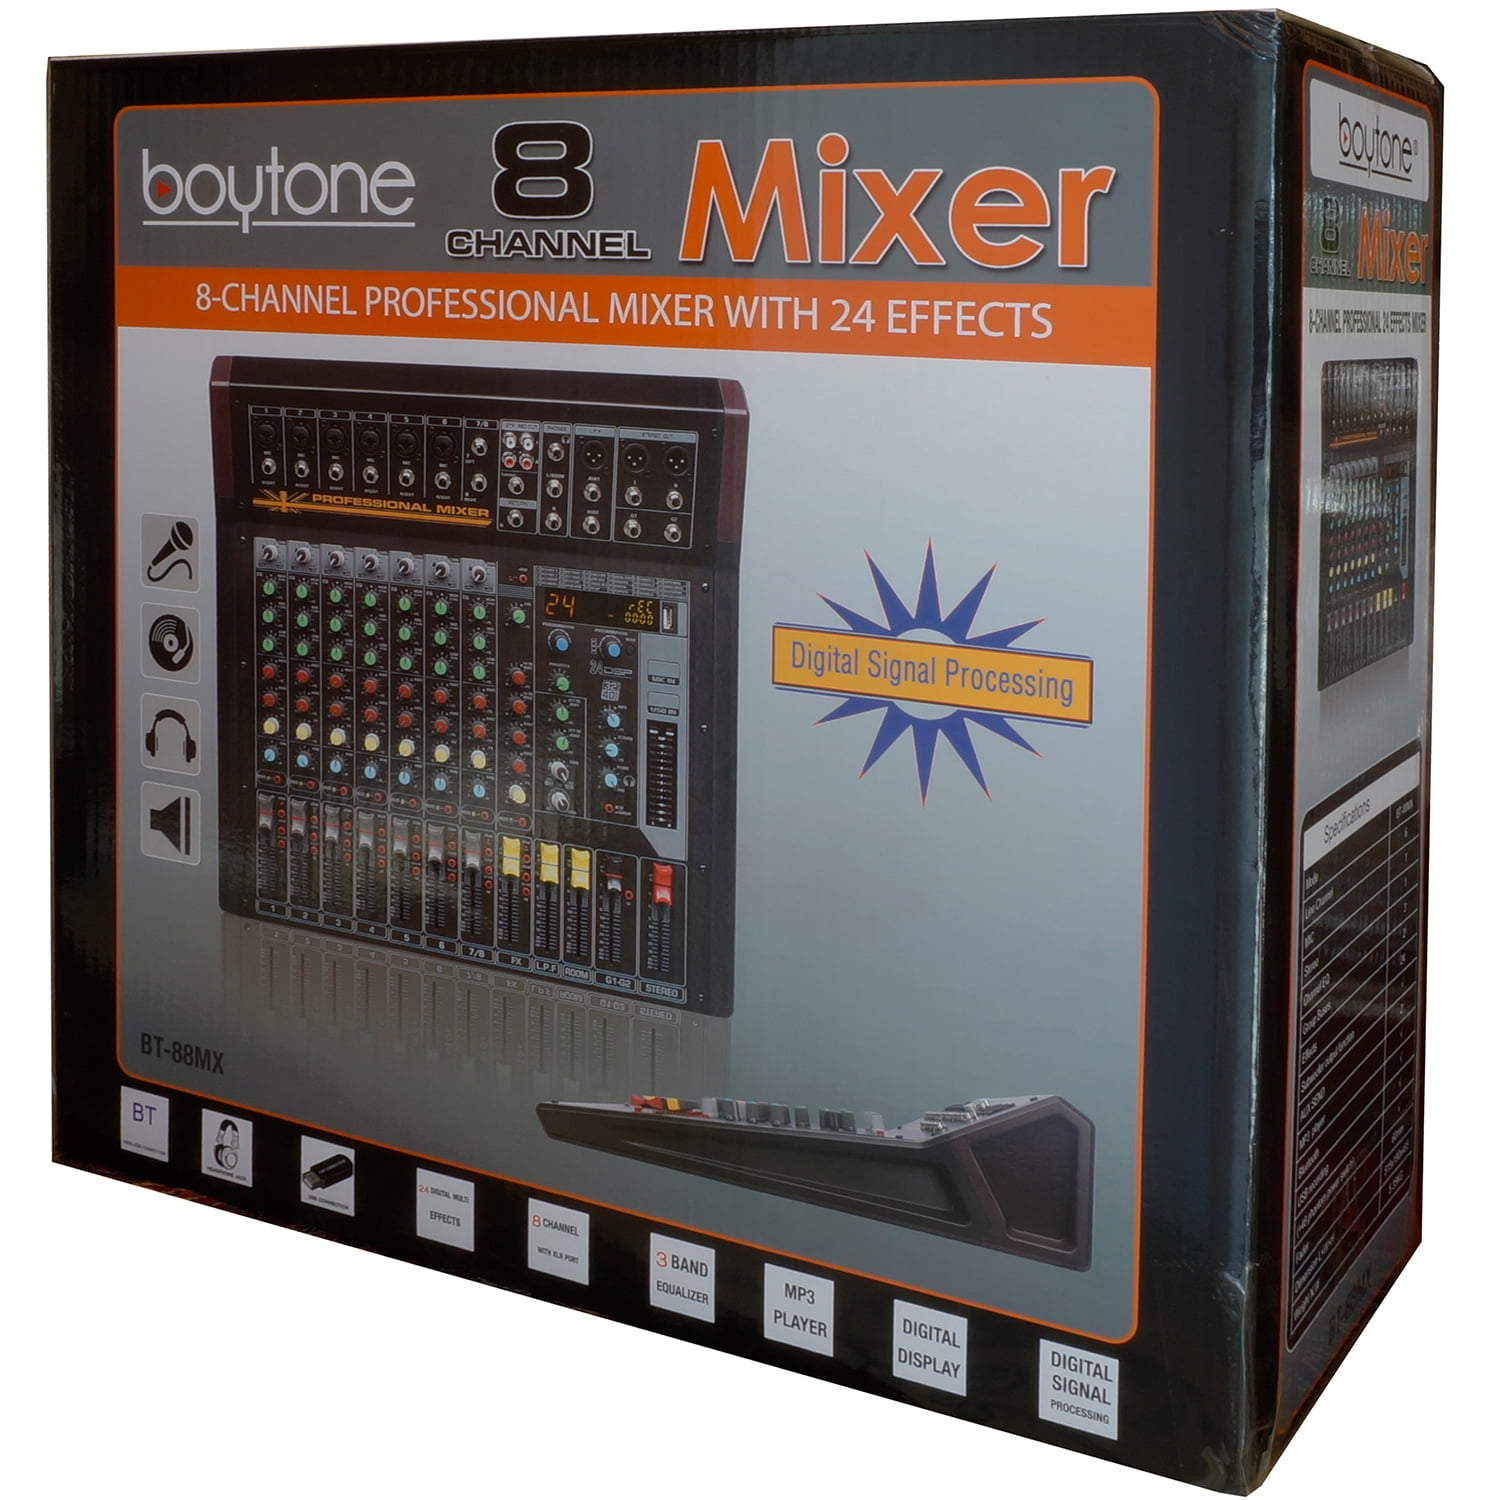  Boytone BT-80MX, 8 - Channel Bluetooth Audio Mixer - DJ Sound  Controller, USB MP3 Player, 4 XLR Microphone Jack, 7 Band EQ, 16 BIT  Digital Multi FX Processor, RCA IN-OUT Jack